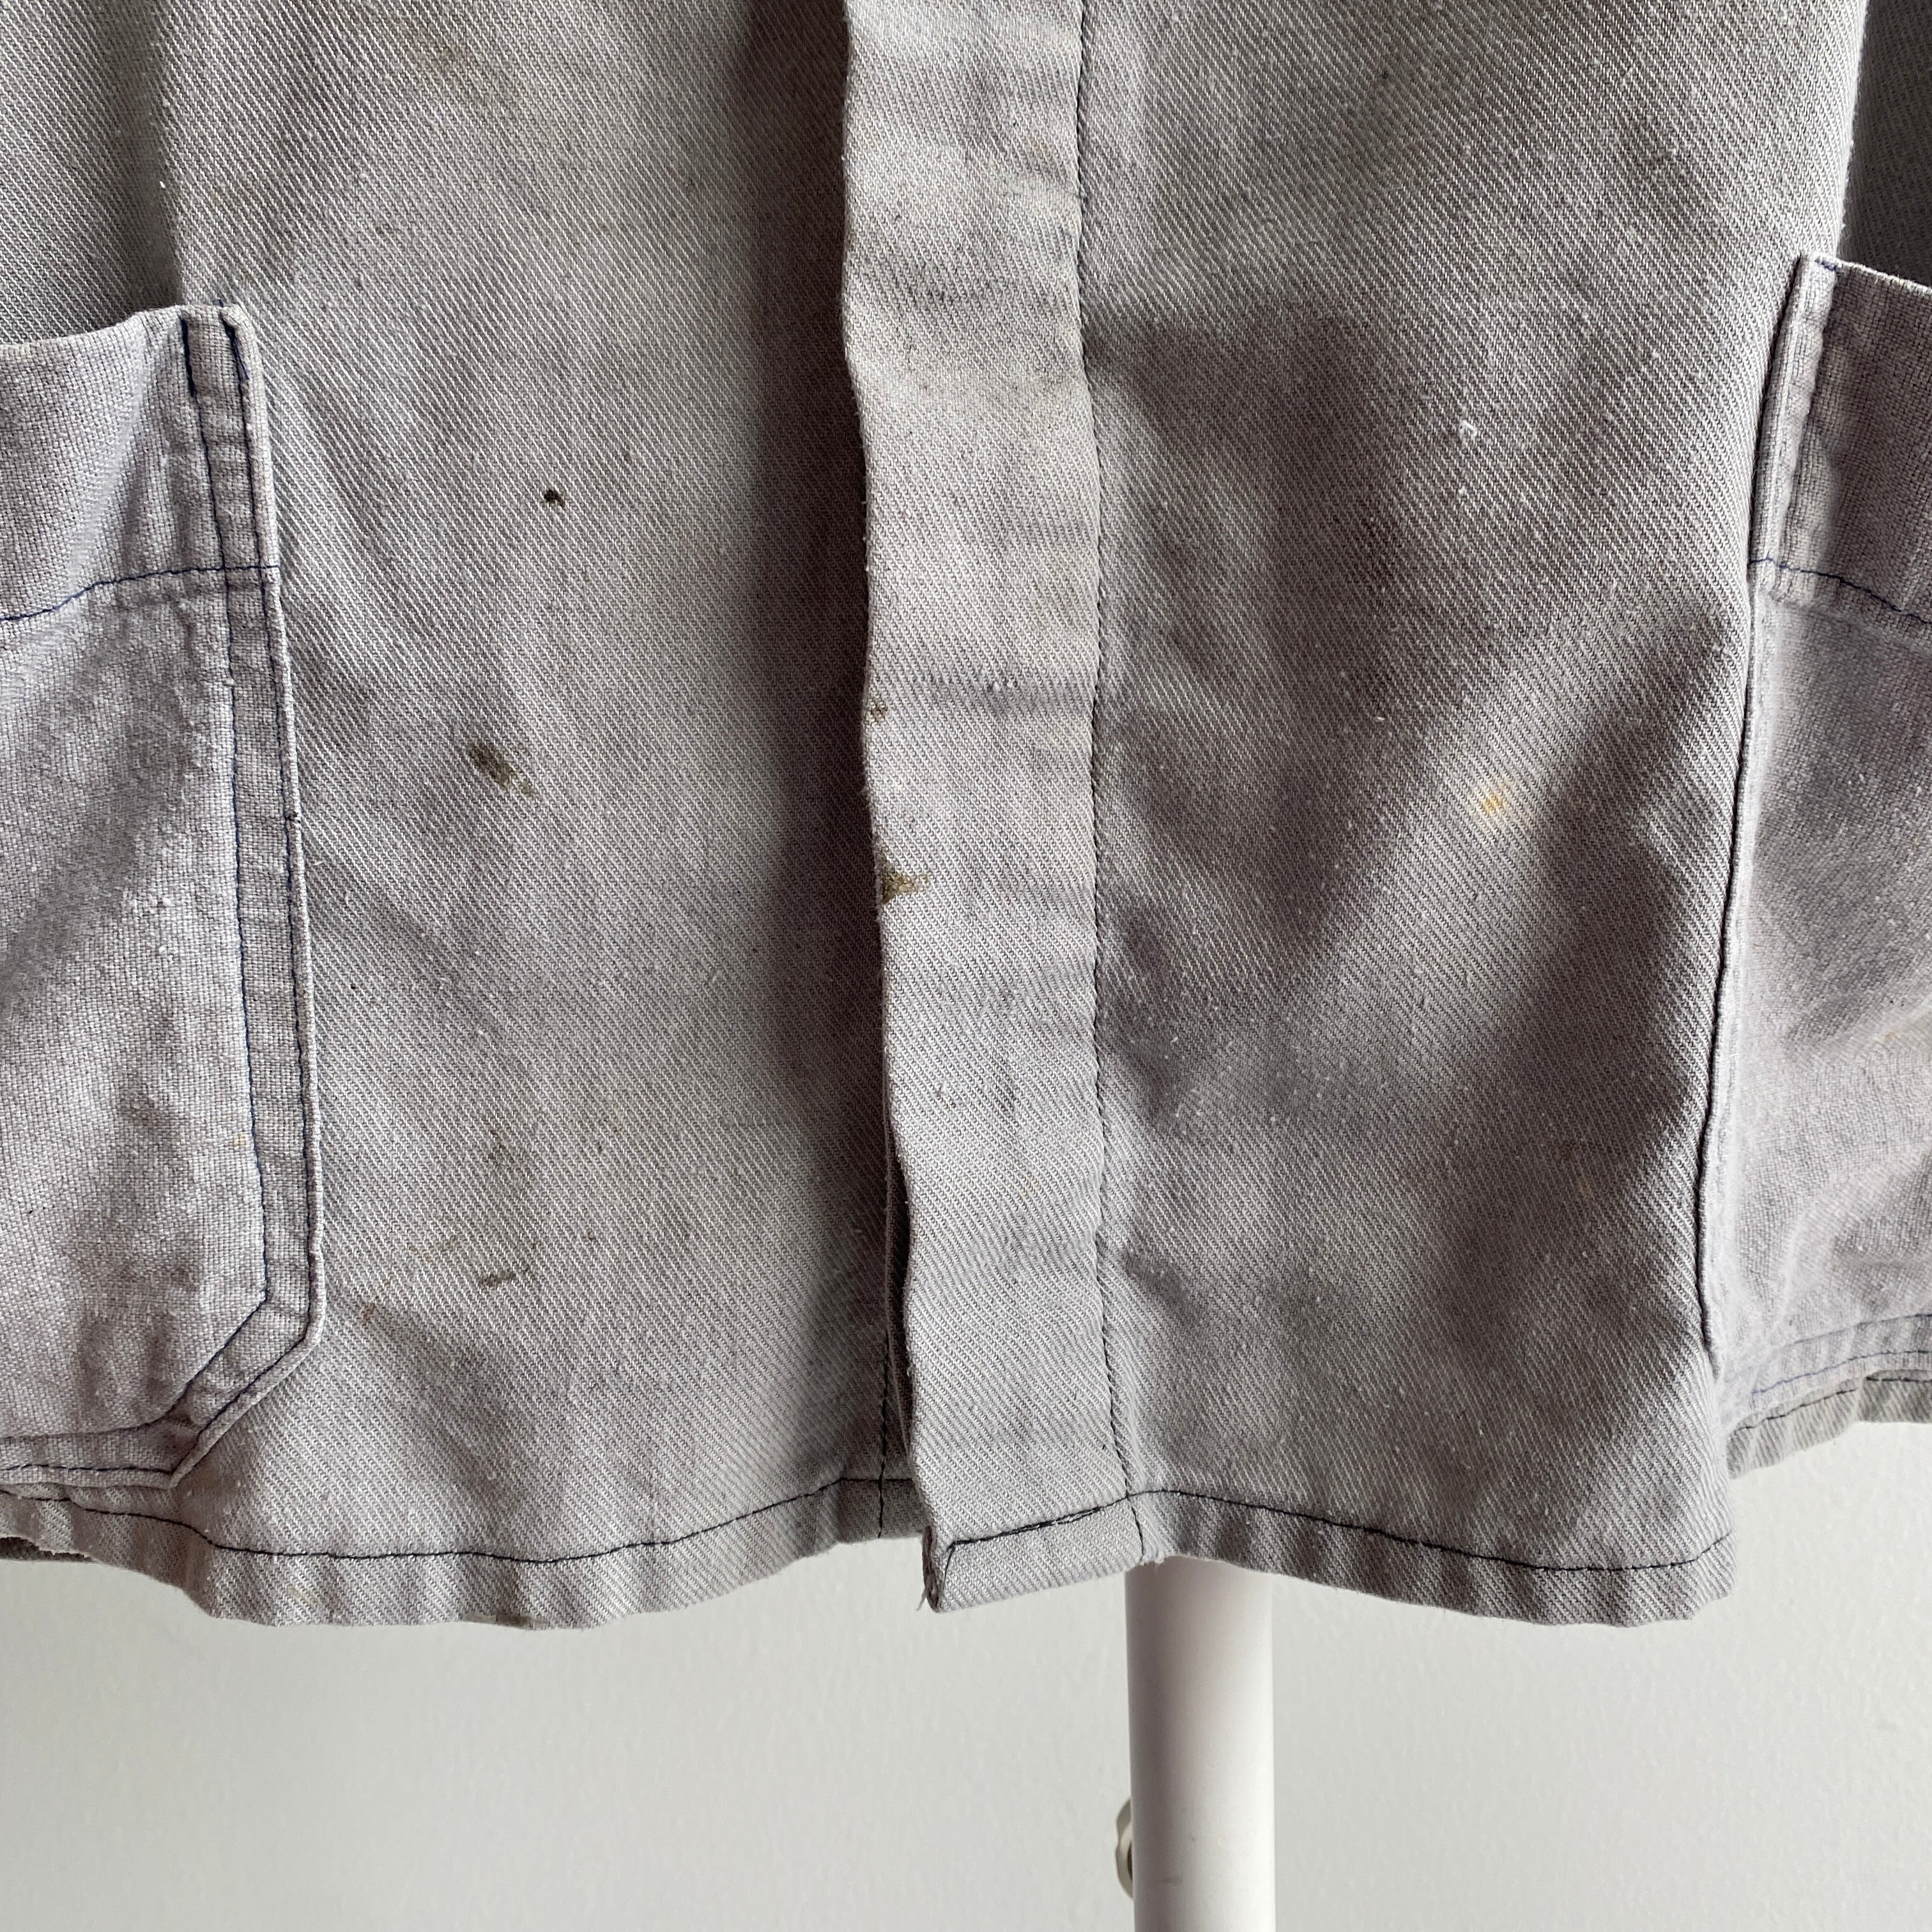 1970/80s Light Gray Wash European Cotton Chore Coat - Larger Size